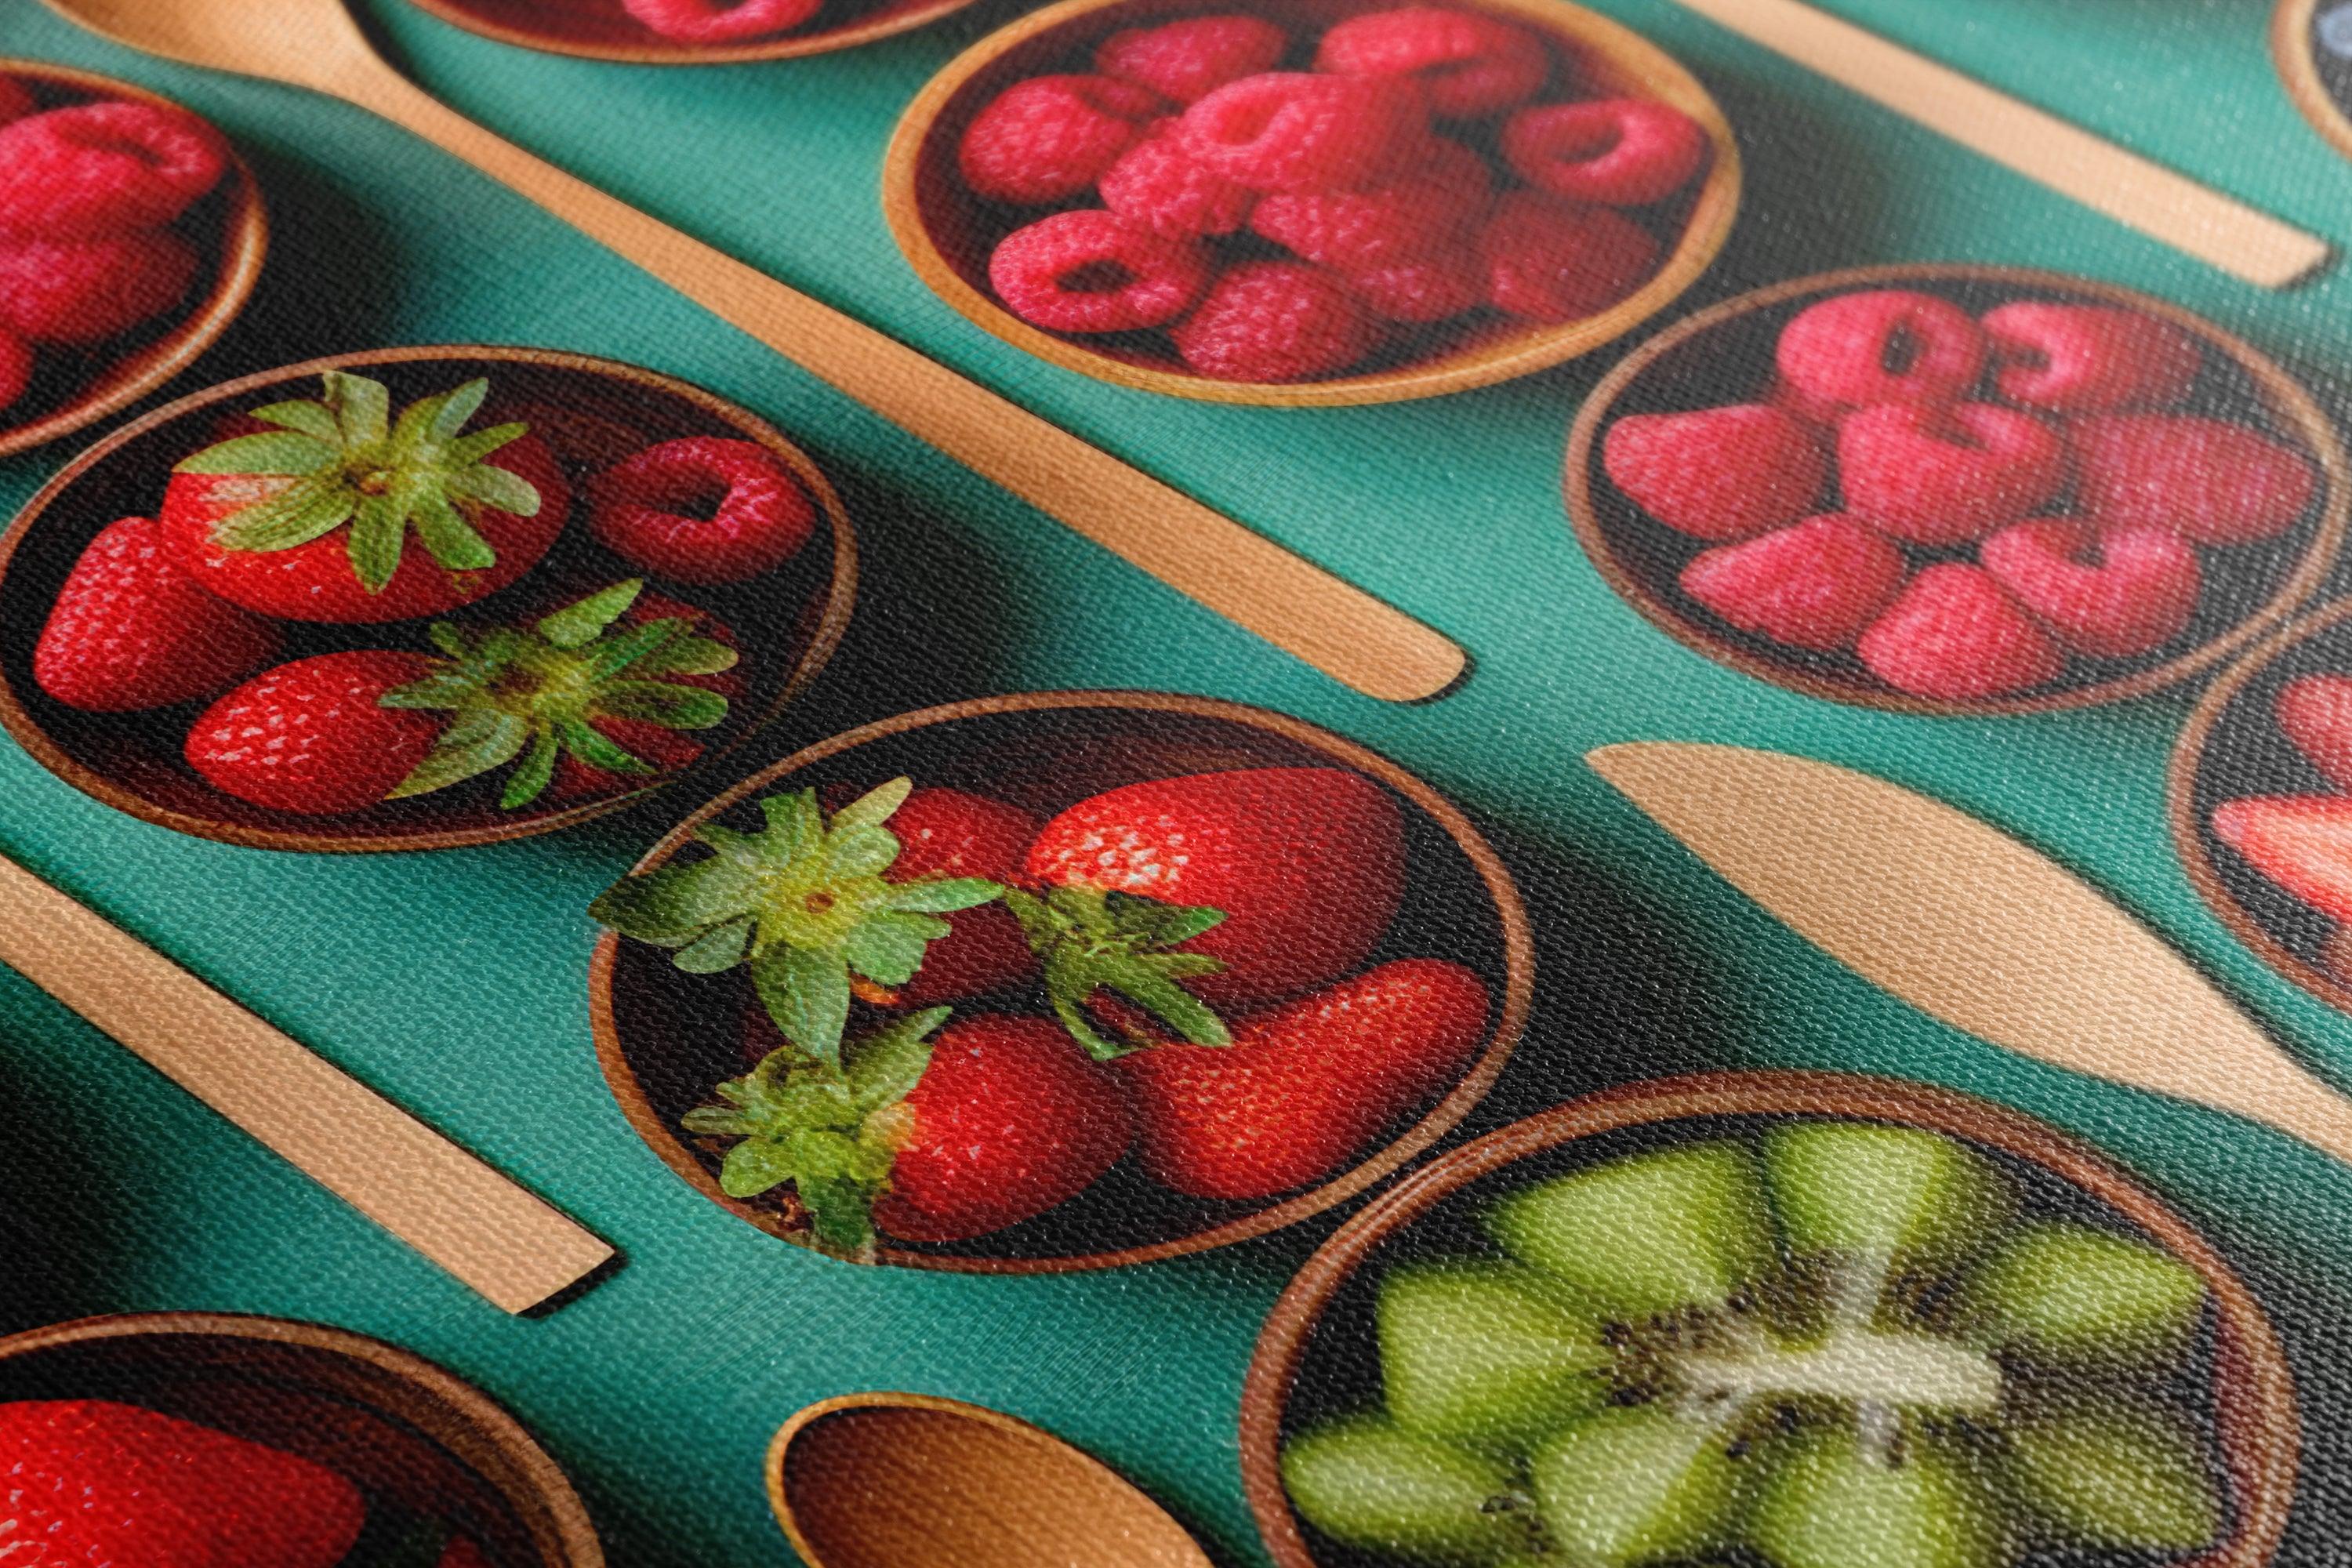 Beautiful Symmetry of Fresh Fruit Bowls - Canvas Print - Artoholica Ready to Hang Canvas Print